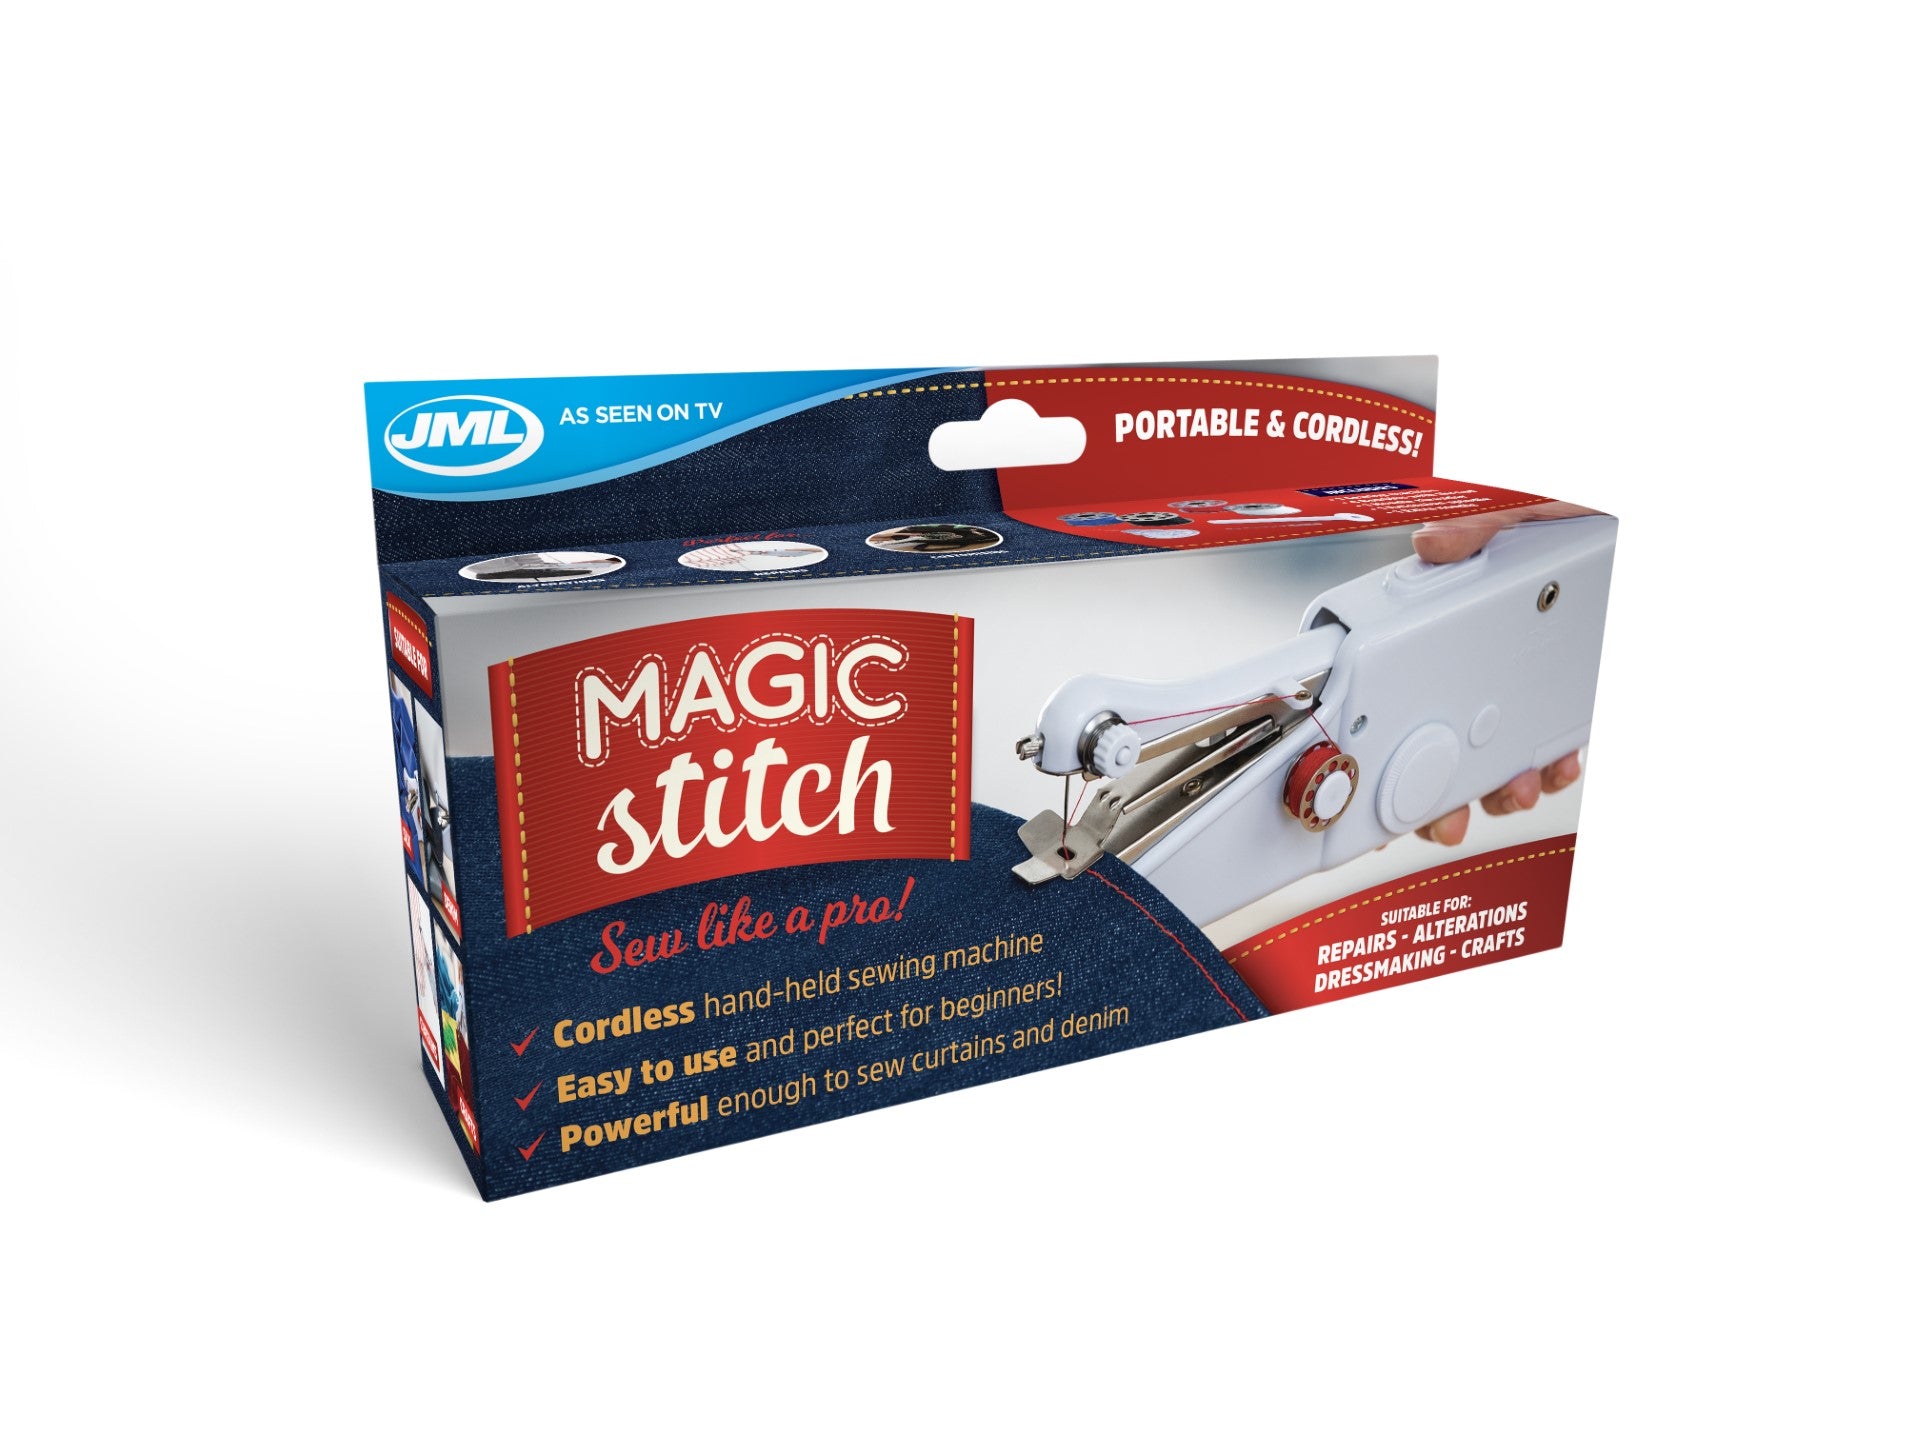 Buy MAGIC STITCH Handheld & Cordless Sewing Machine at ShopLC.